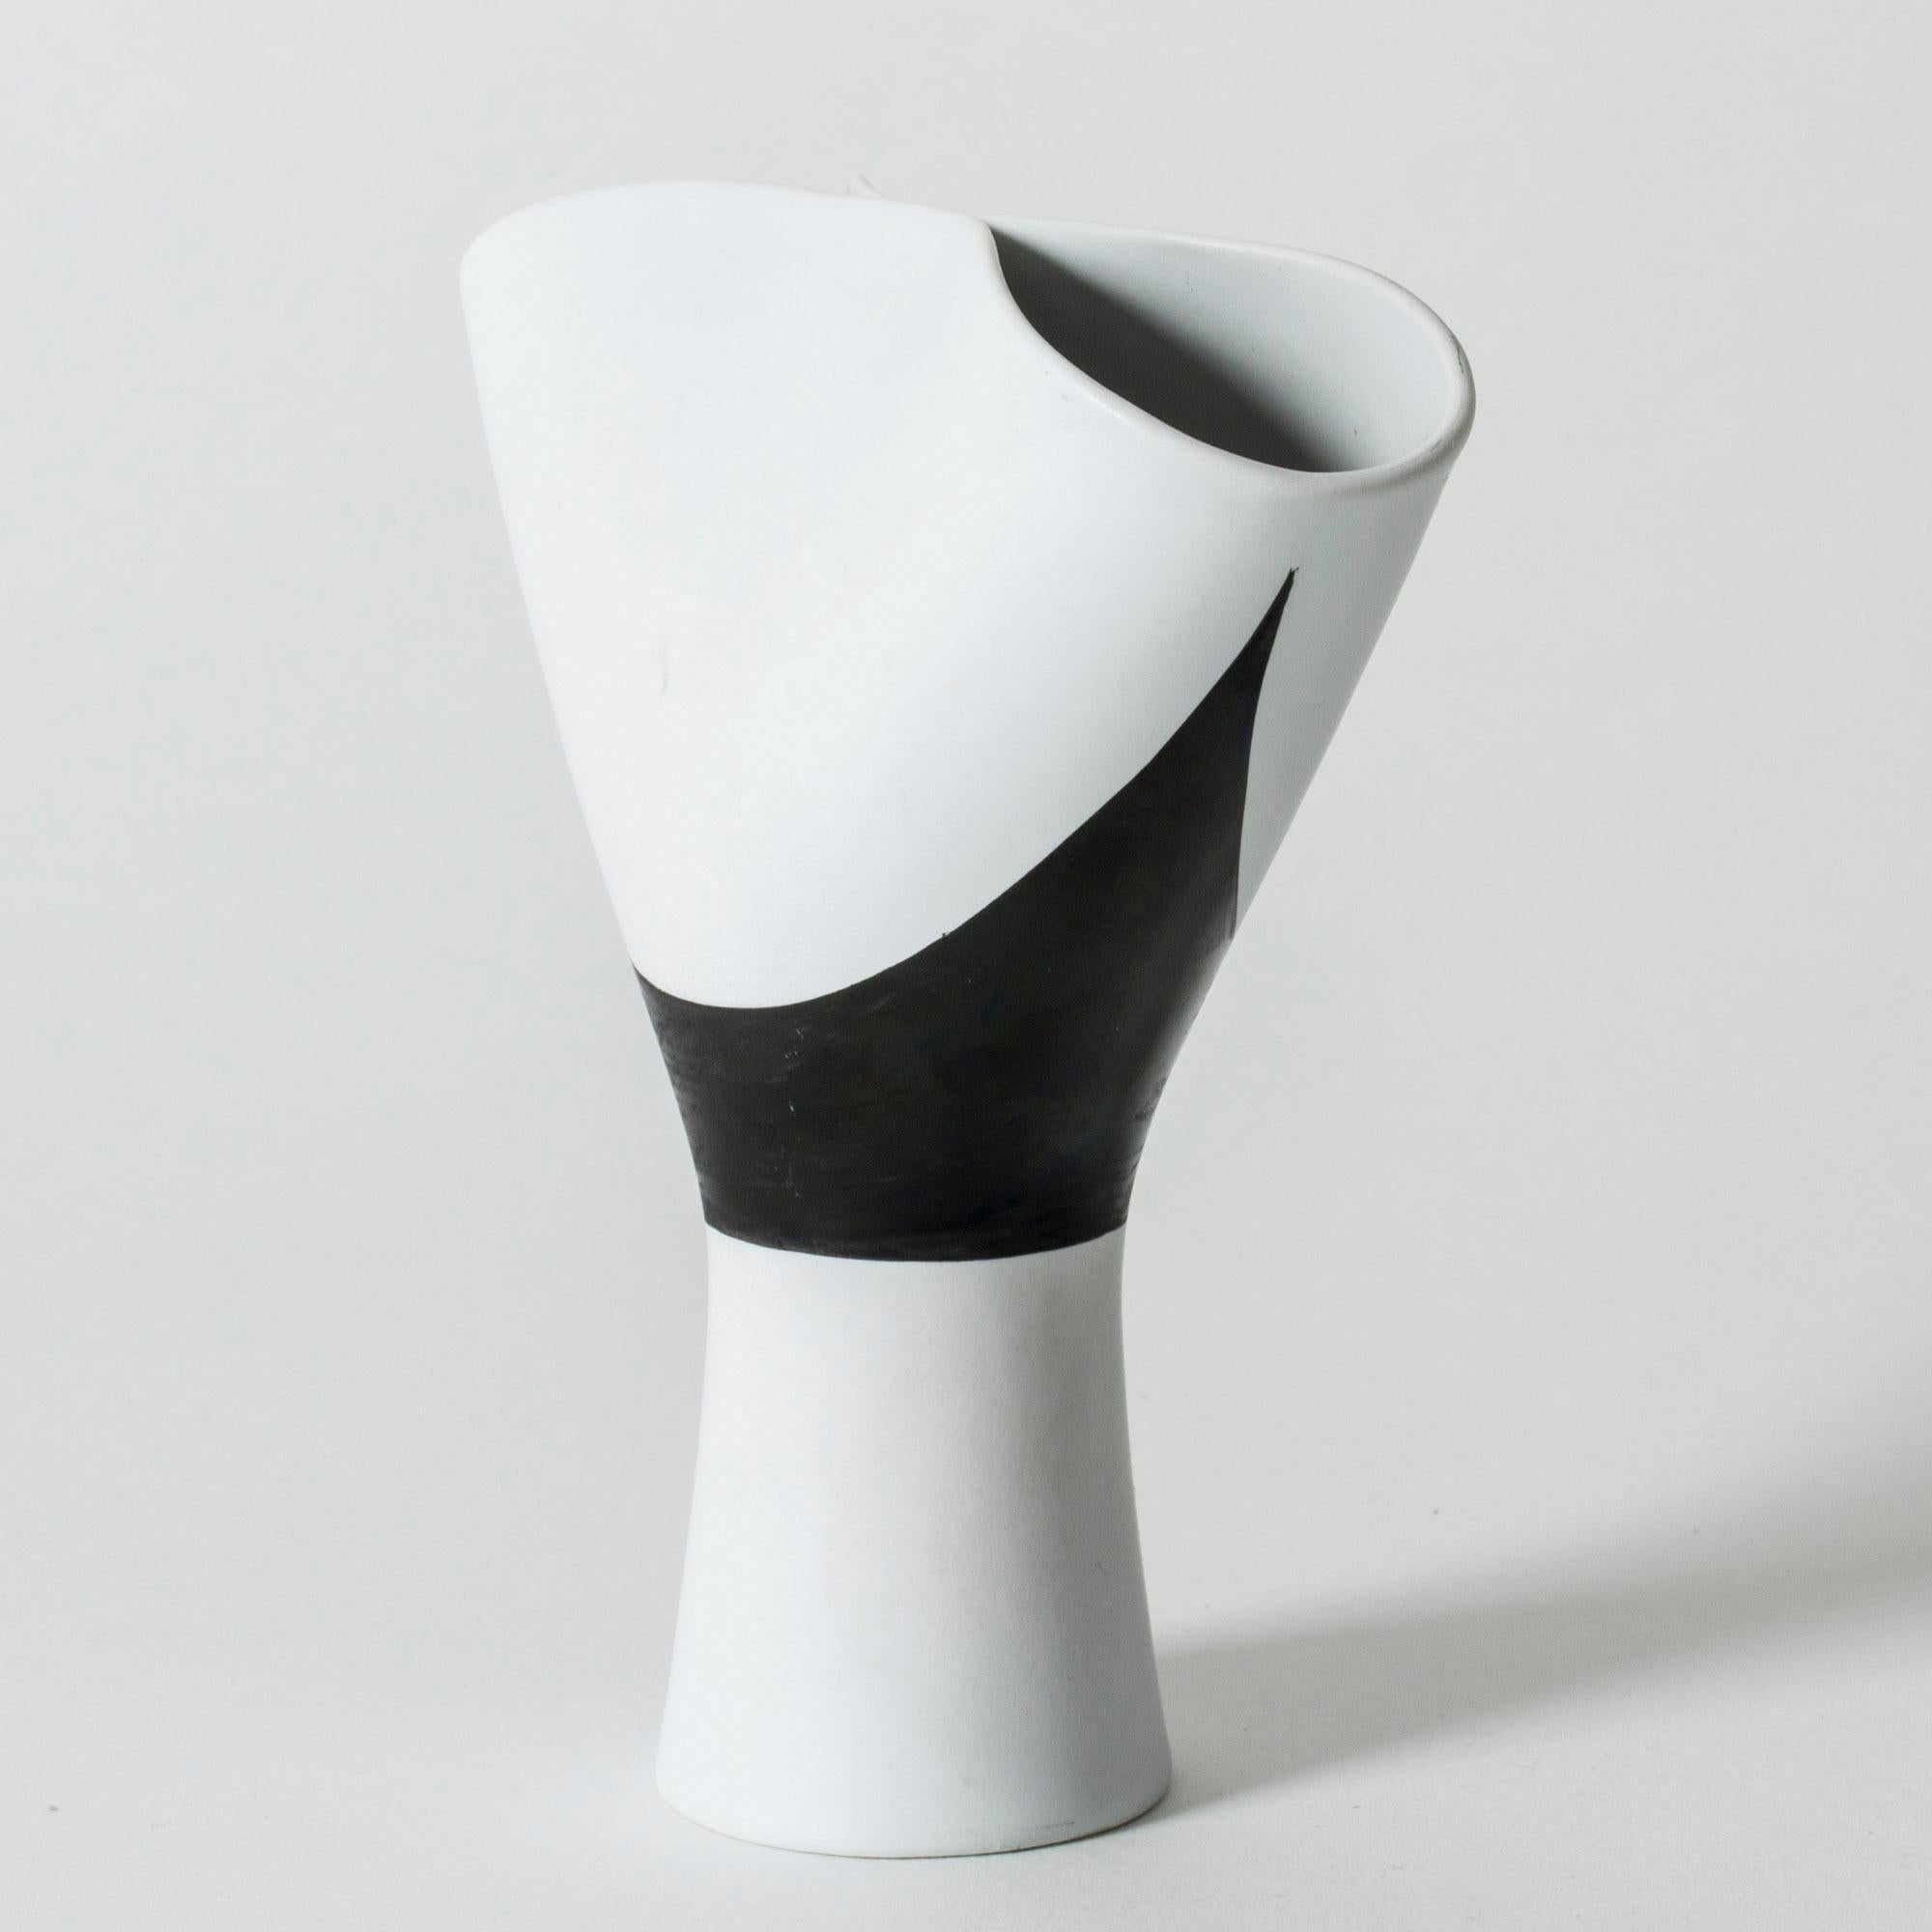 Striking “Veckla” vase, designed by Stig Lindberg. Graphic black decor on the white carrara stoneware, where the visible brush strokes create a nice contrast to the sleek ceramic.